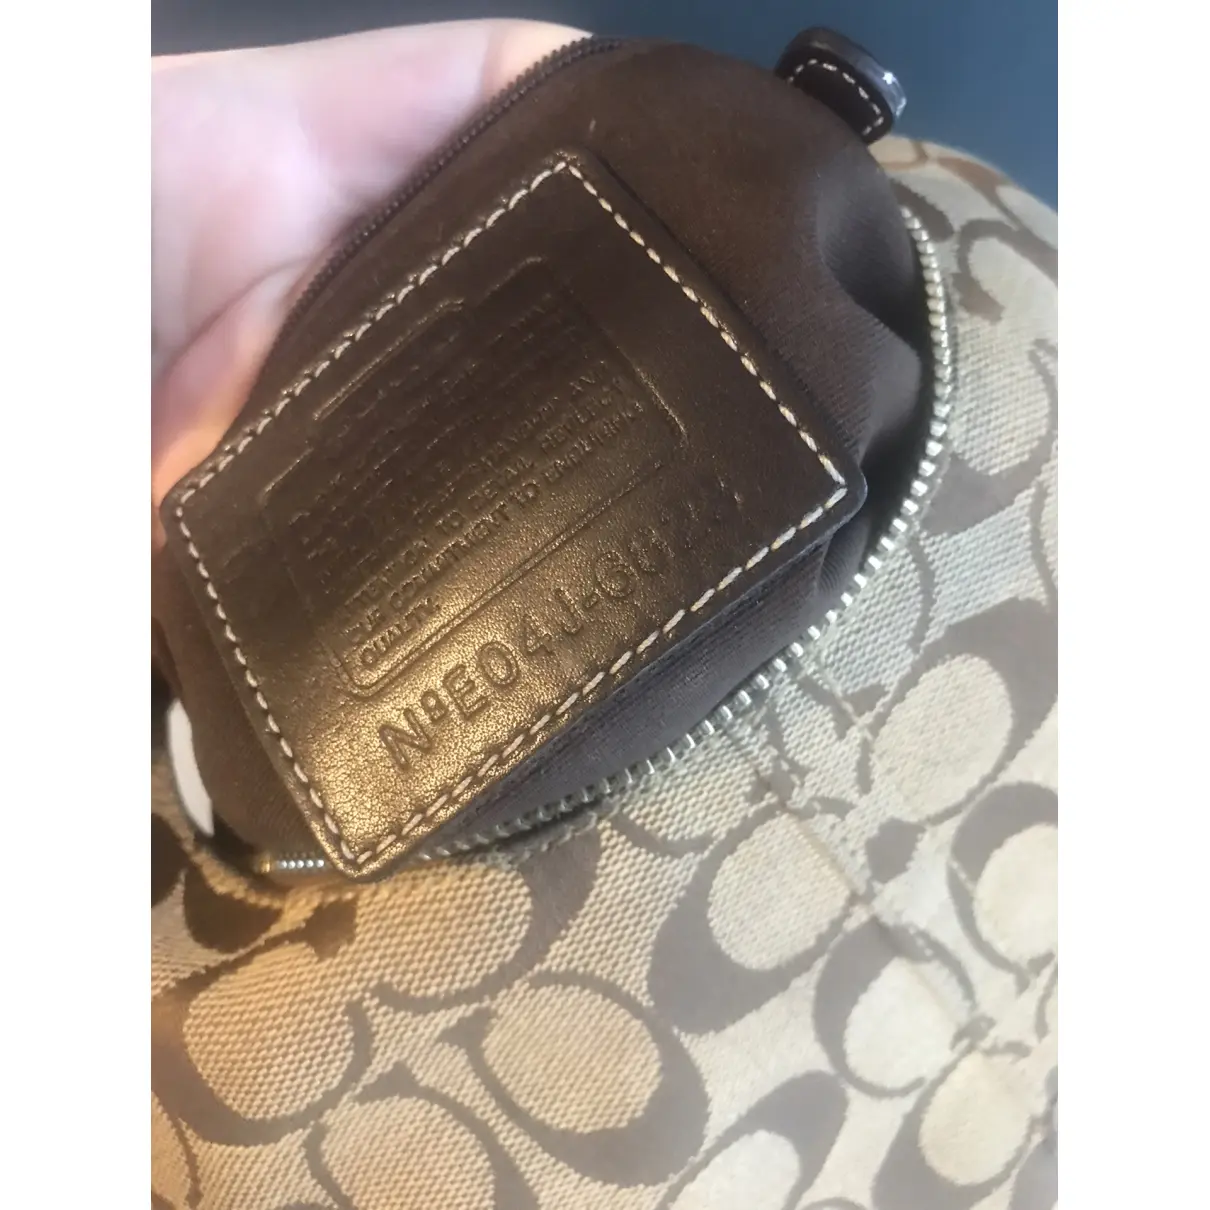 Buy Coach Hamilton Hobo leather handbag online